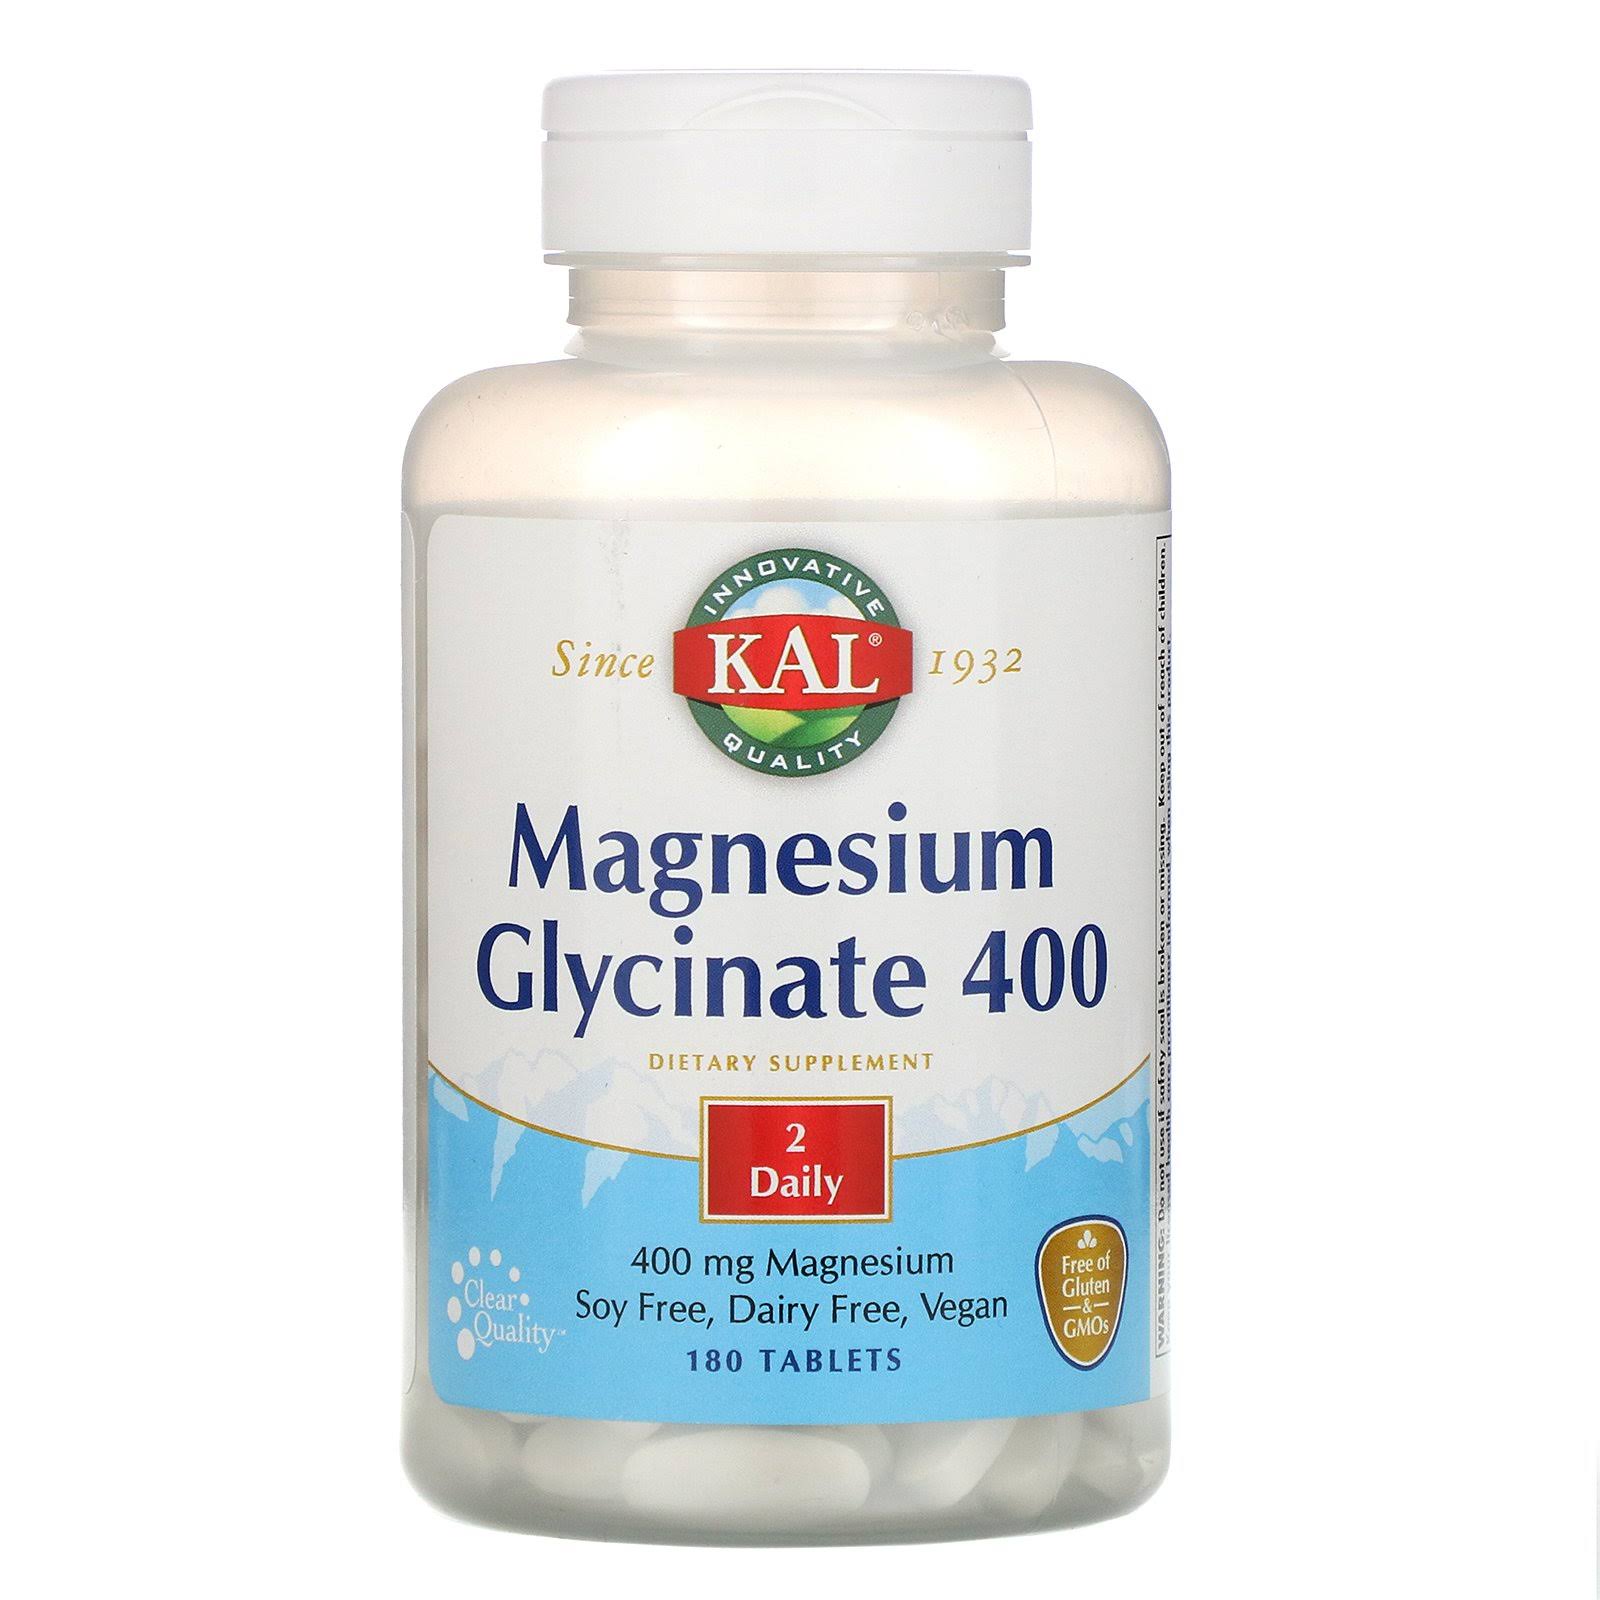 Kal Magnesium Glycinate 400 - 400mg, 180 Tablets